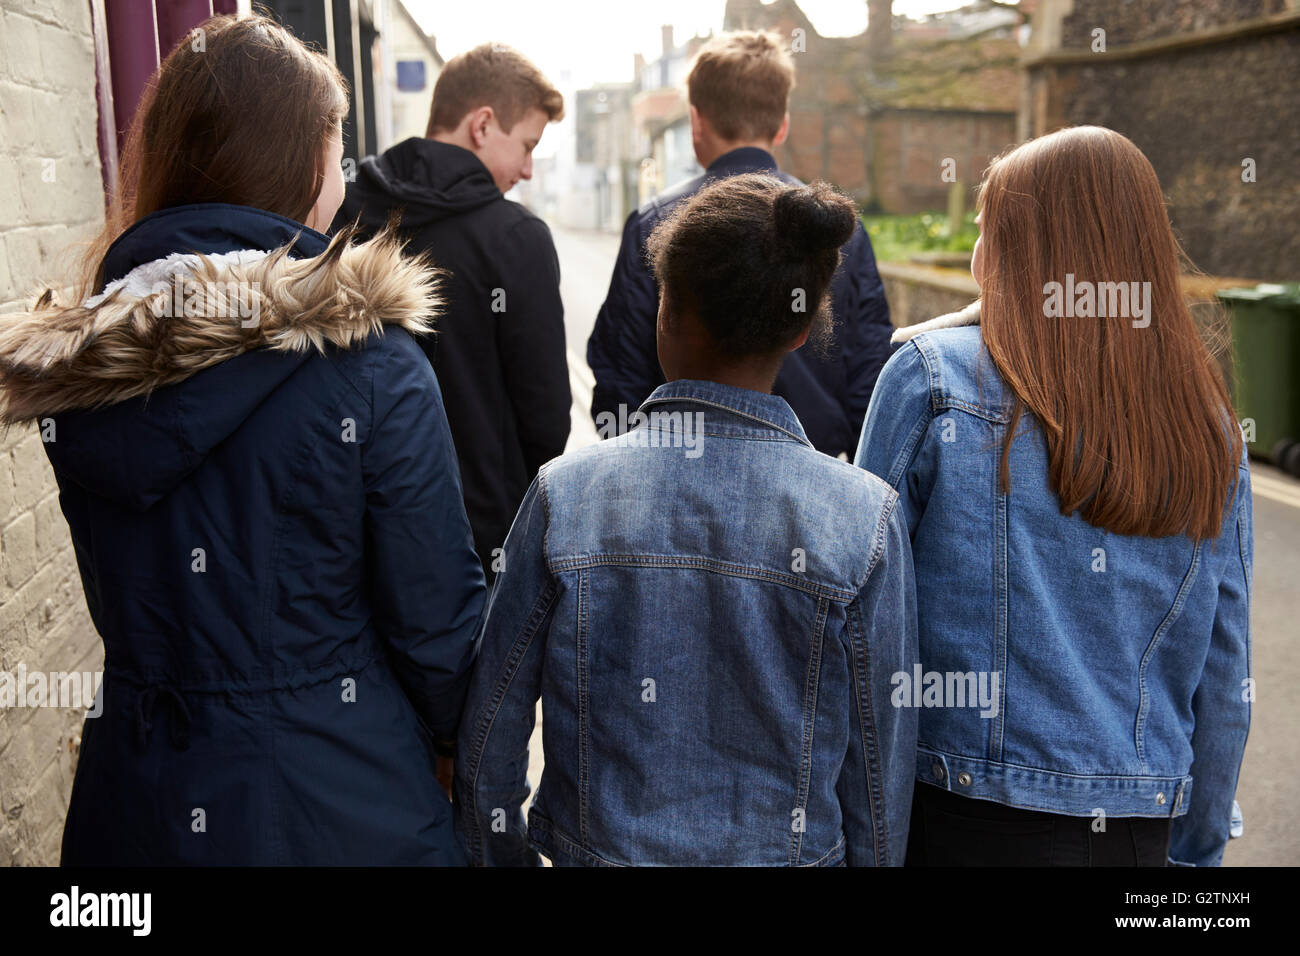 Rear View Of Teenagers Walking Along Urban Street Stock Photo